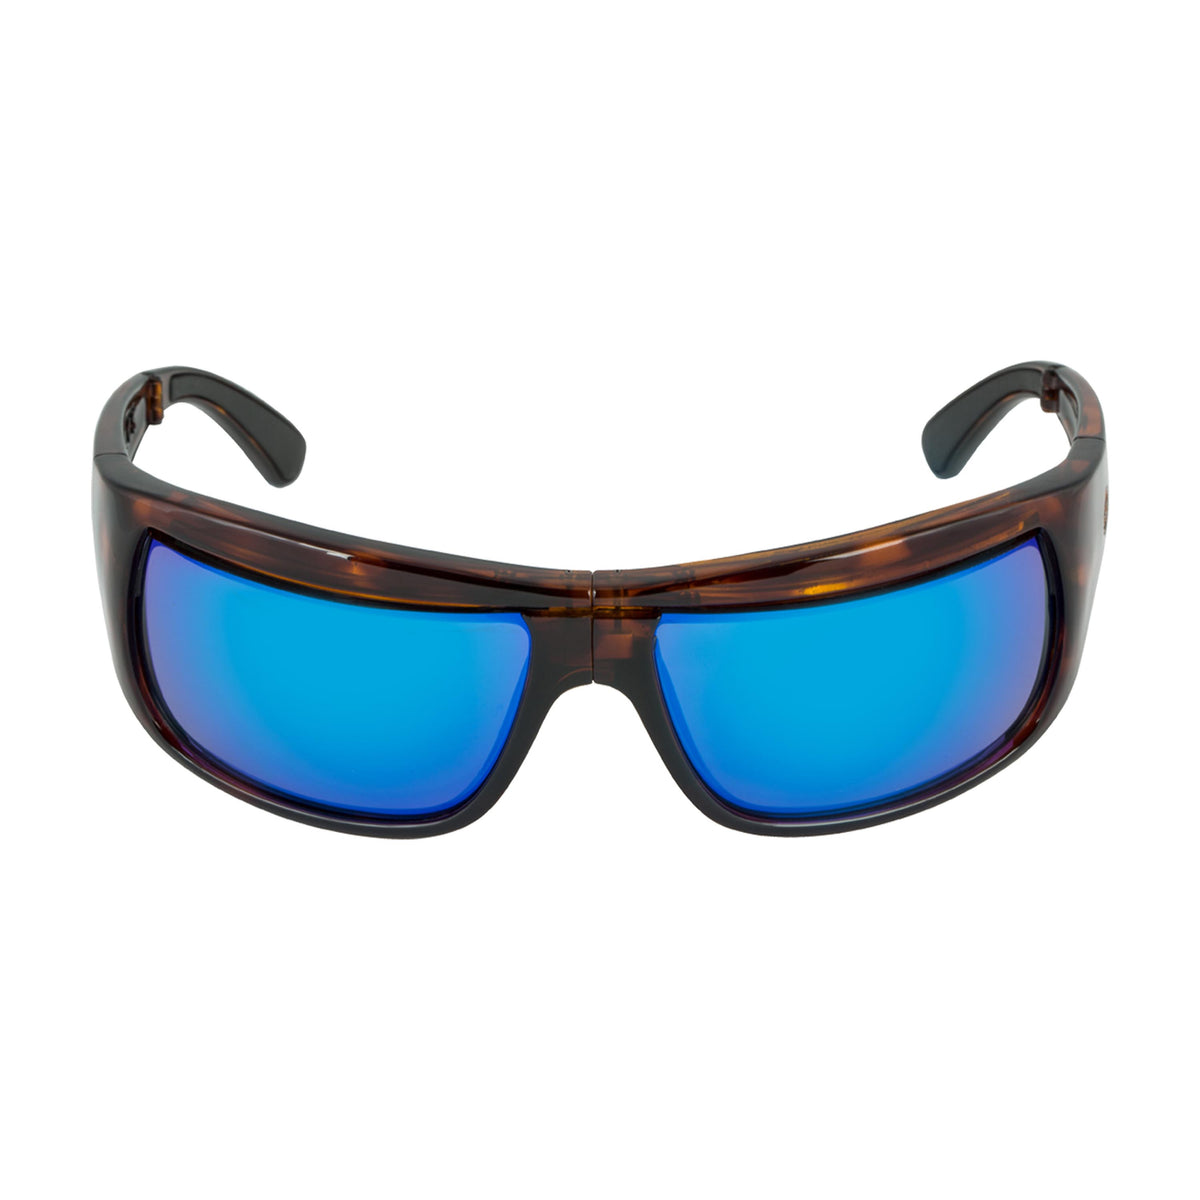 Popticals, Premium Compact Sunglasses, PopH2O, 010070-CTUN, Polarized Sunglasses, Gloss Tortoise Frame, Gray Lenses w/Blue Mirror Finish, Front View